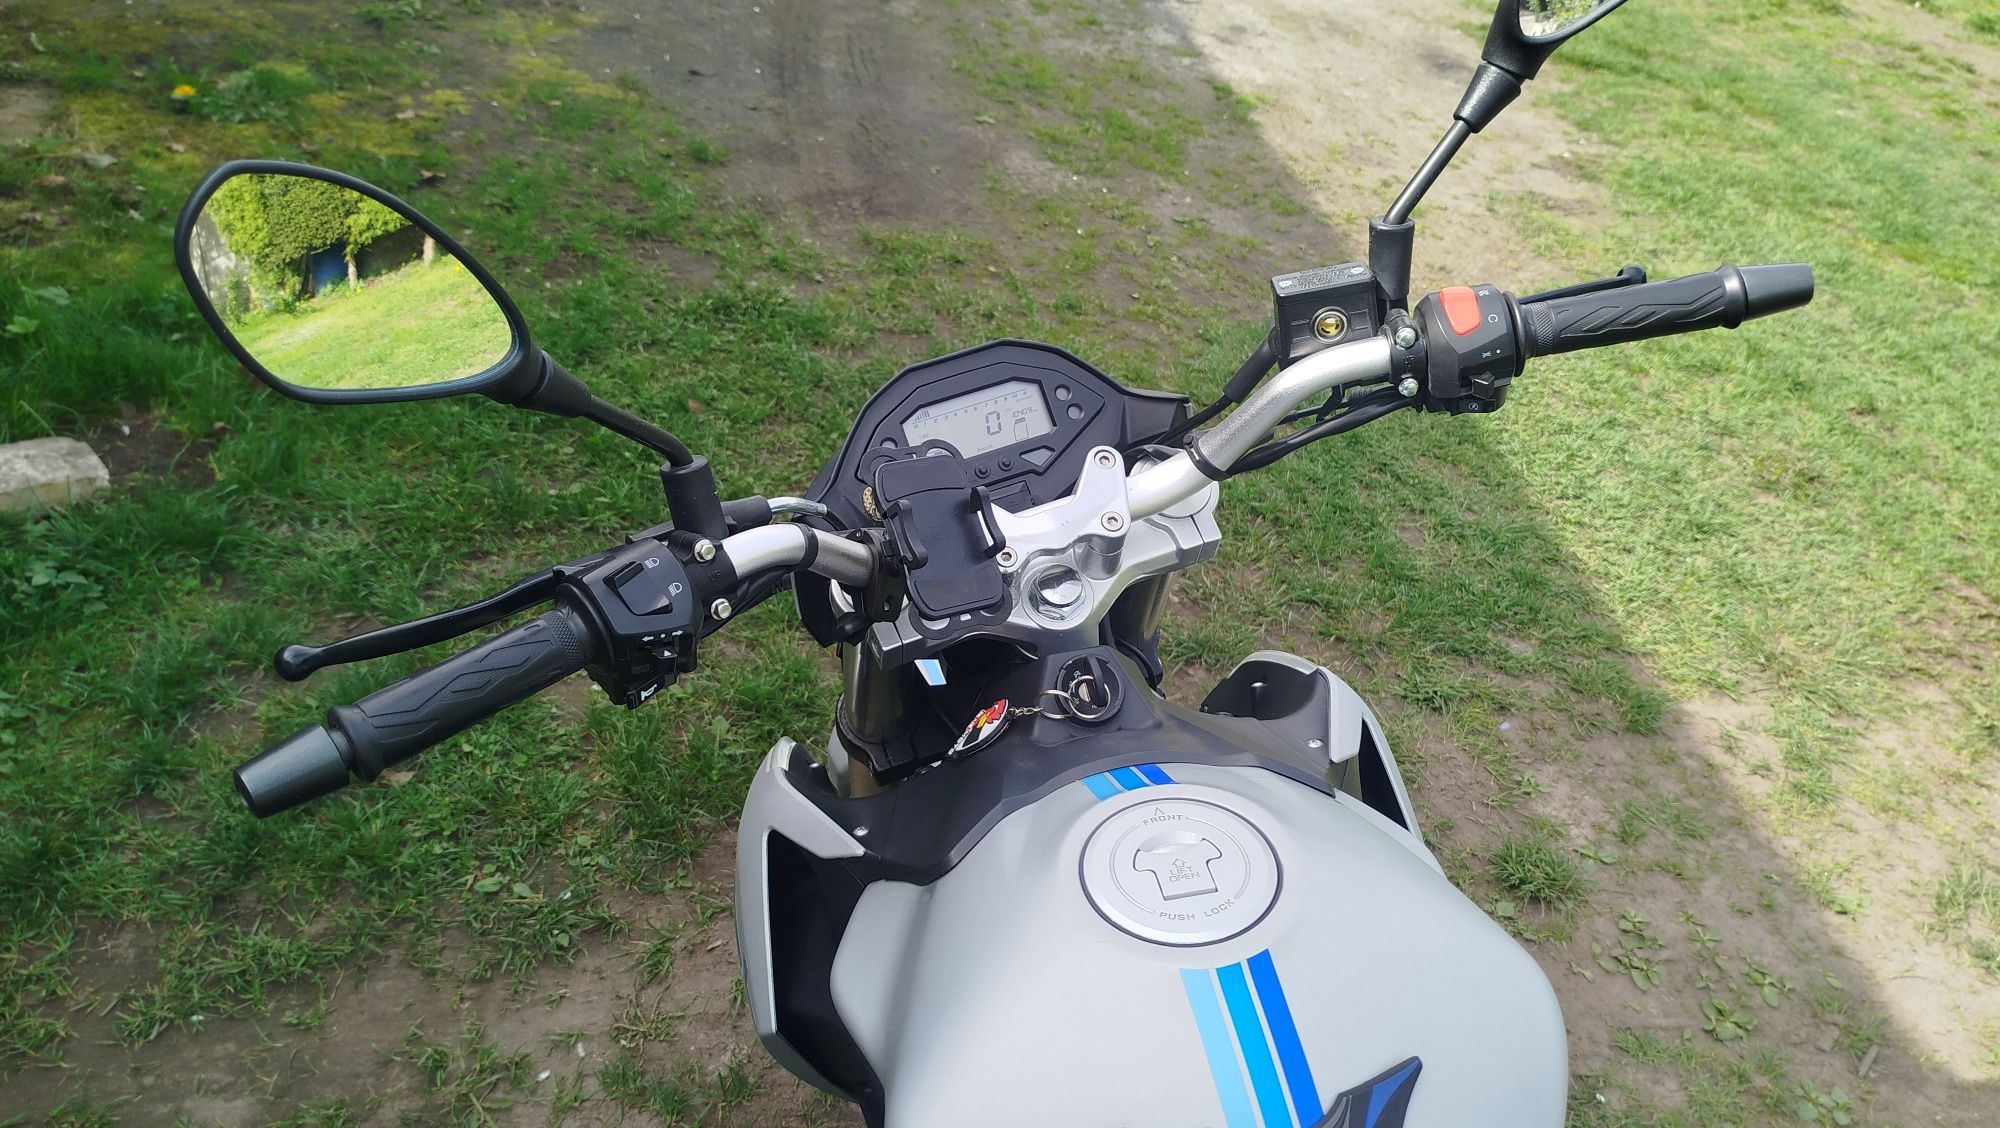 Motocykl JUNAK RSX 125 rok 2019 kat. B